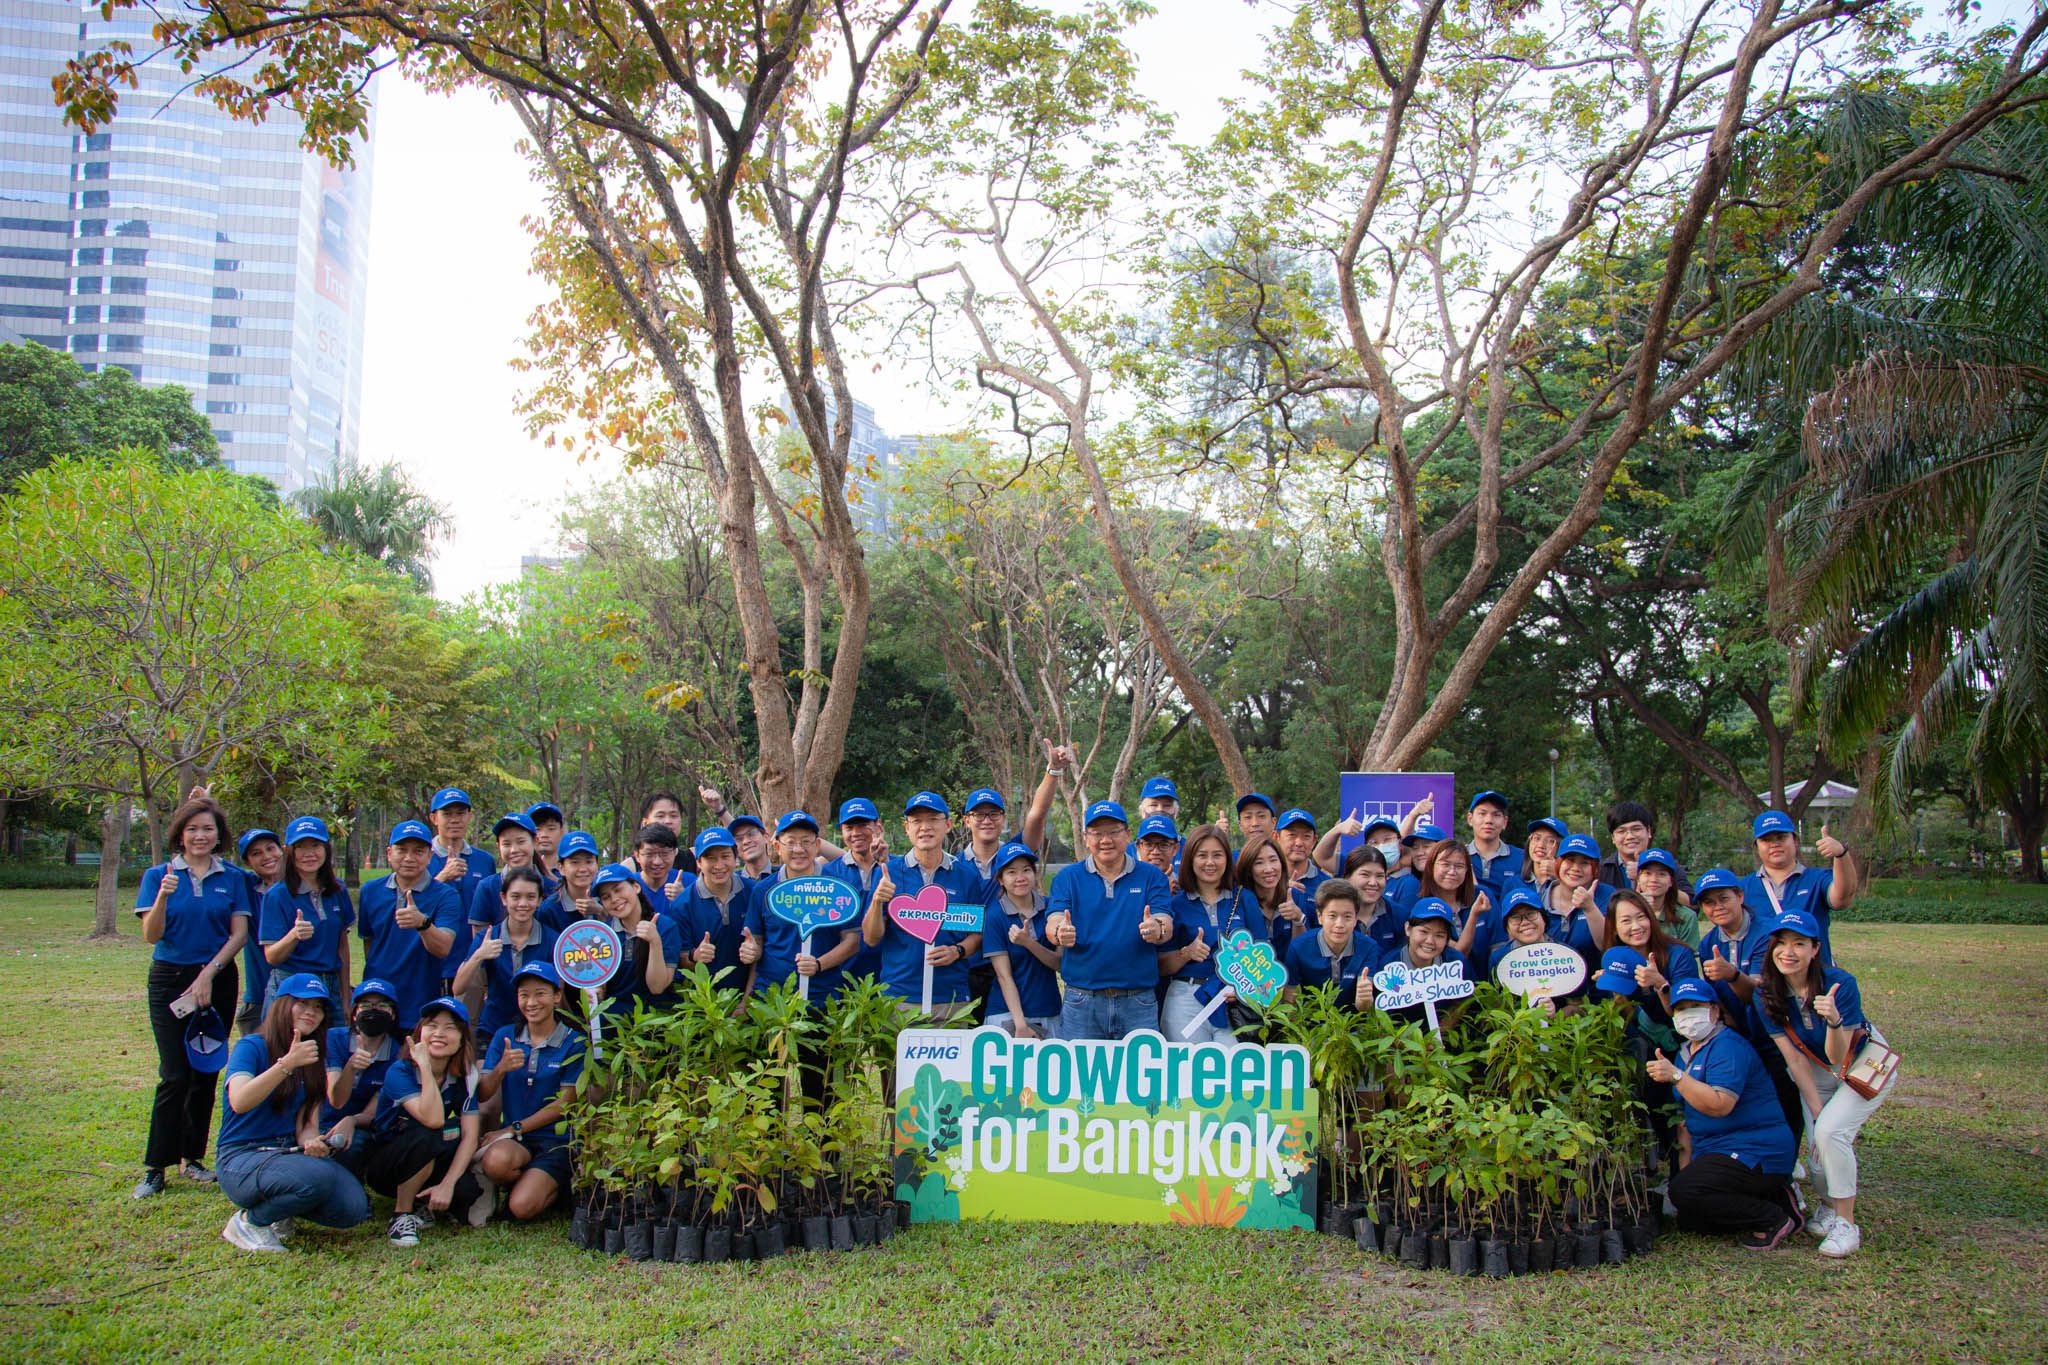 KPMG Grow Green for Bangkok - เคพีเอ็มจี อาสาปลูกต้นไม้และสร้างกำแพงกรองฝุ่นเพื่อกรุงเทพมหานคร